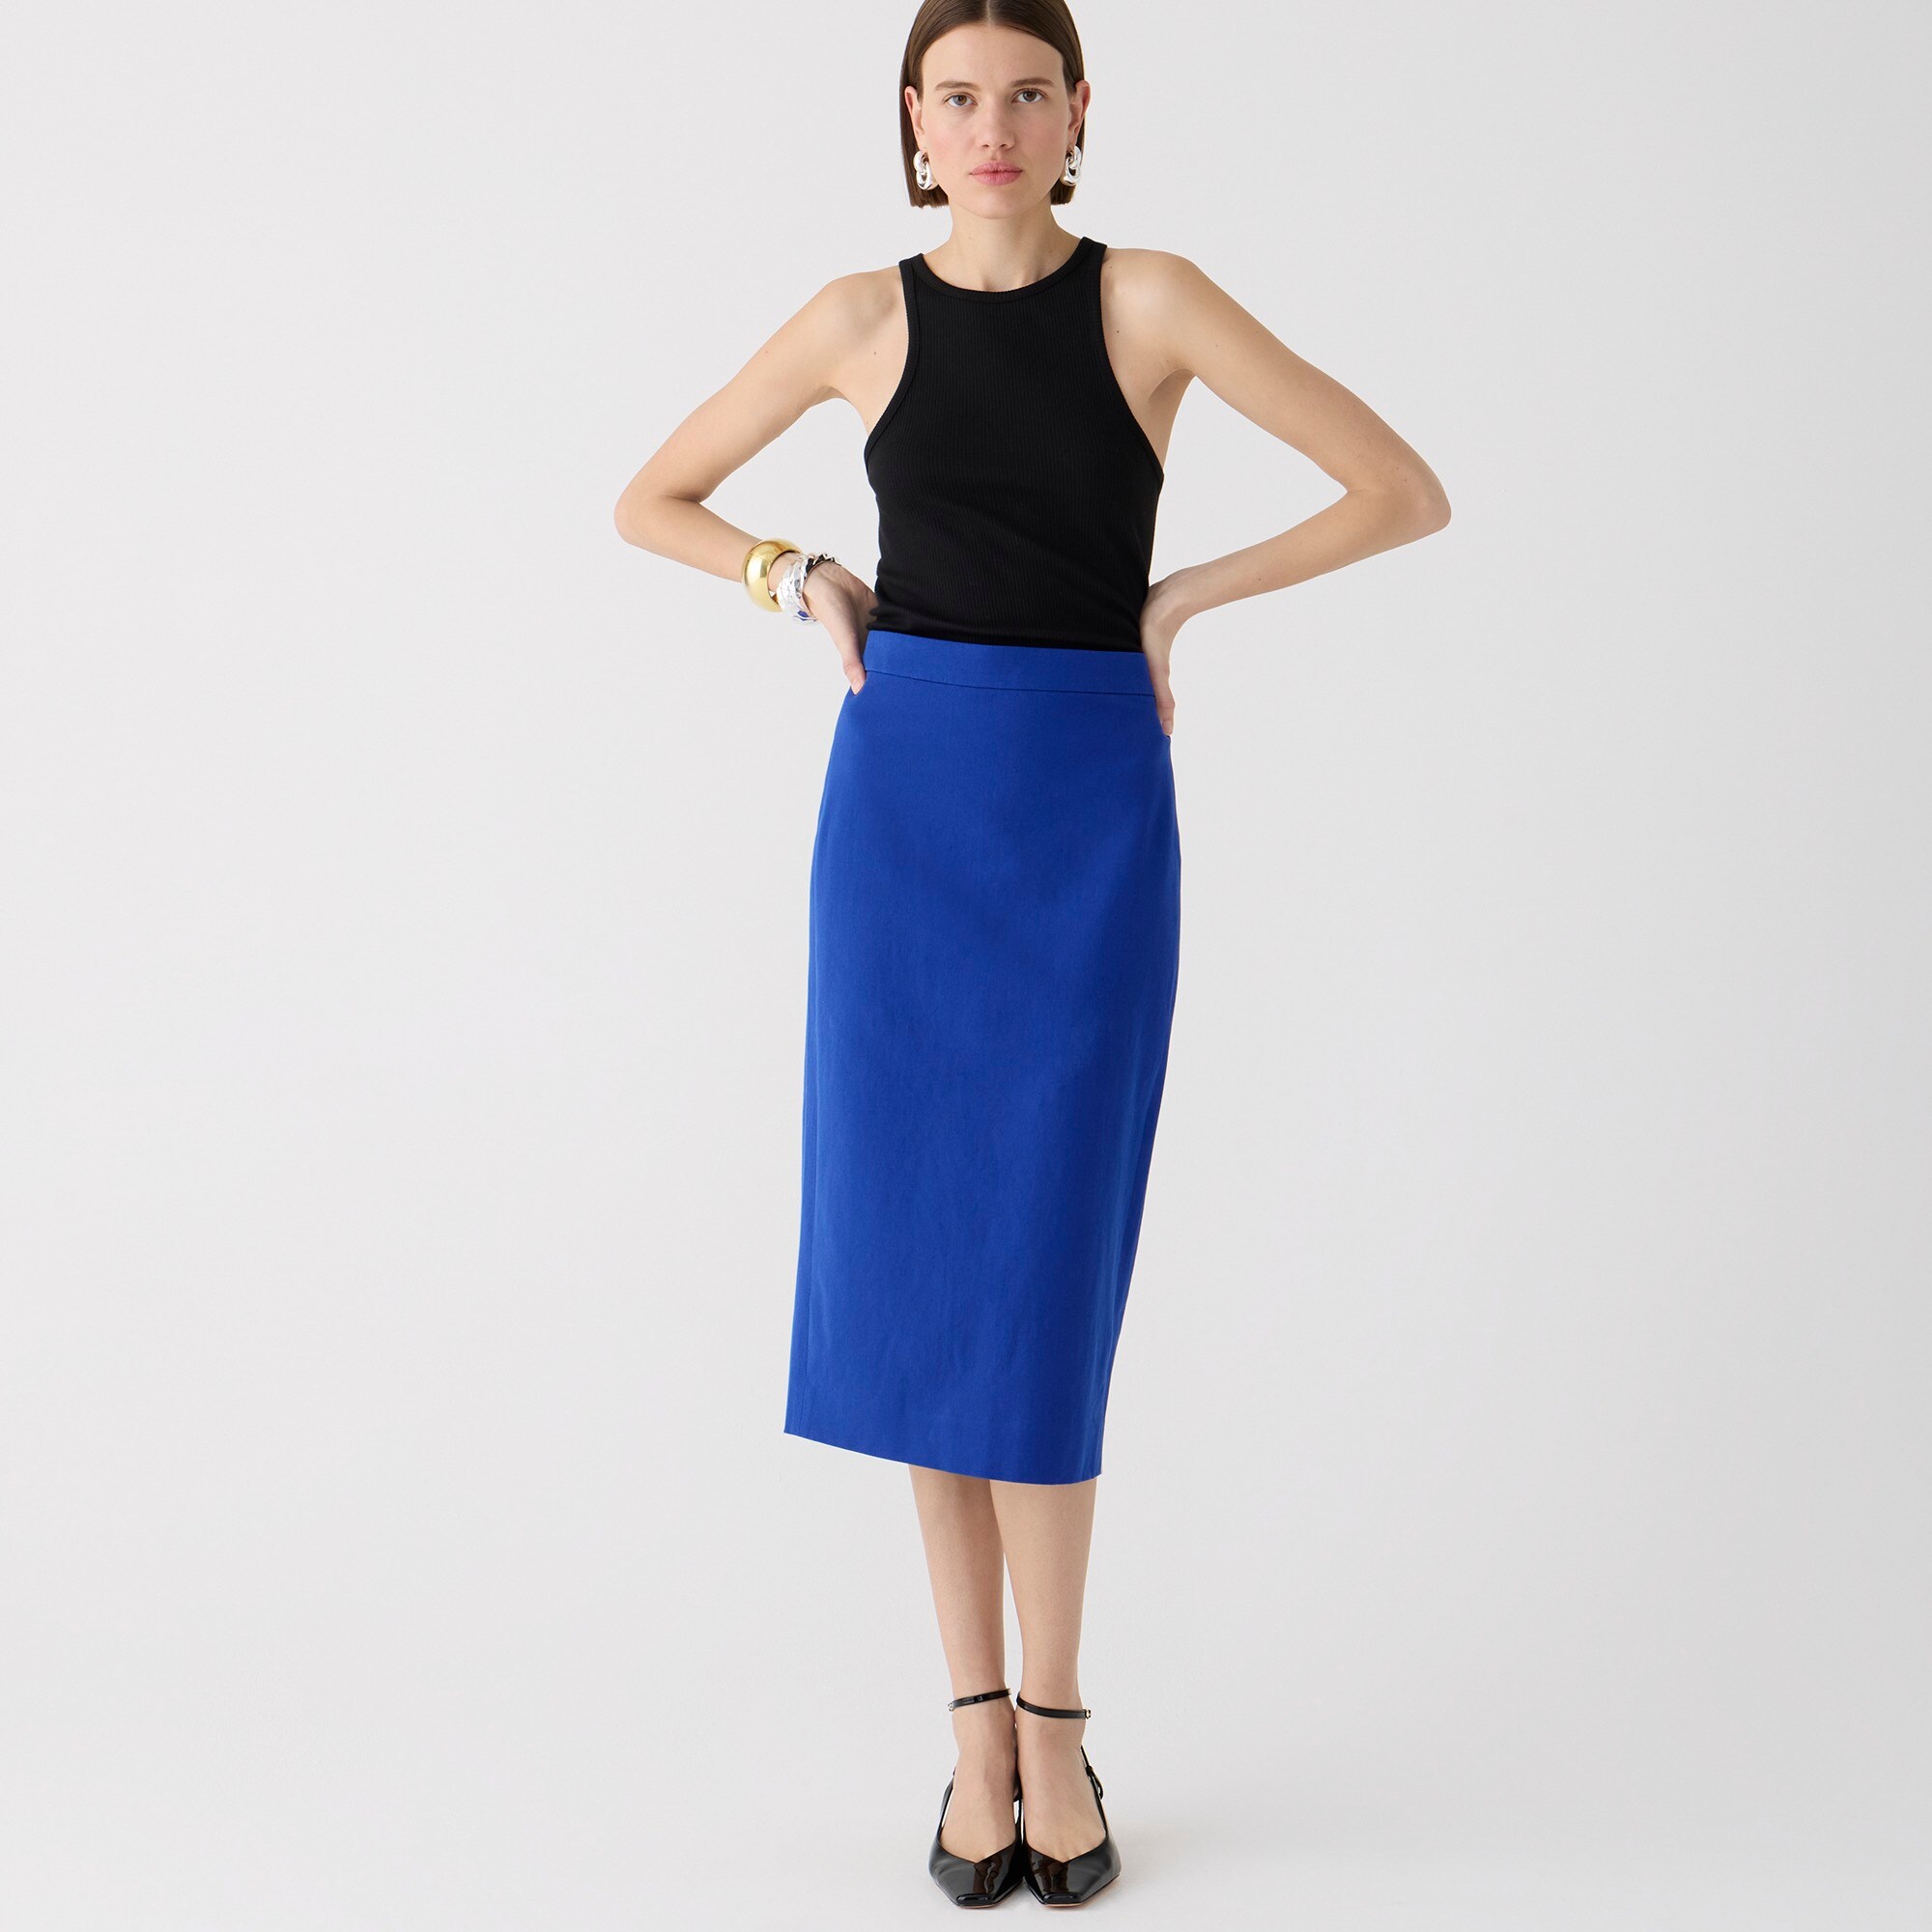 womens Tall No. 3 Pencil skirt in bi-stretch cotton blend